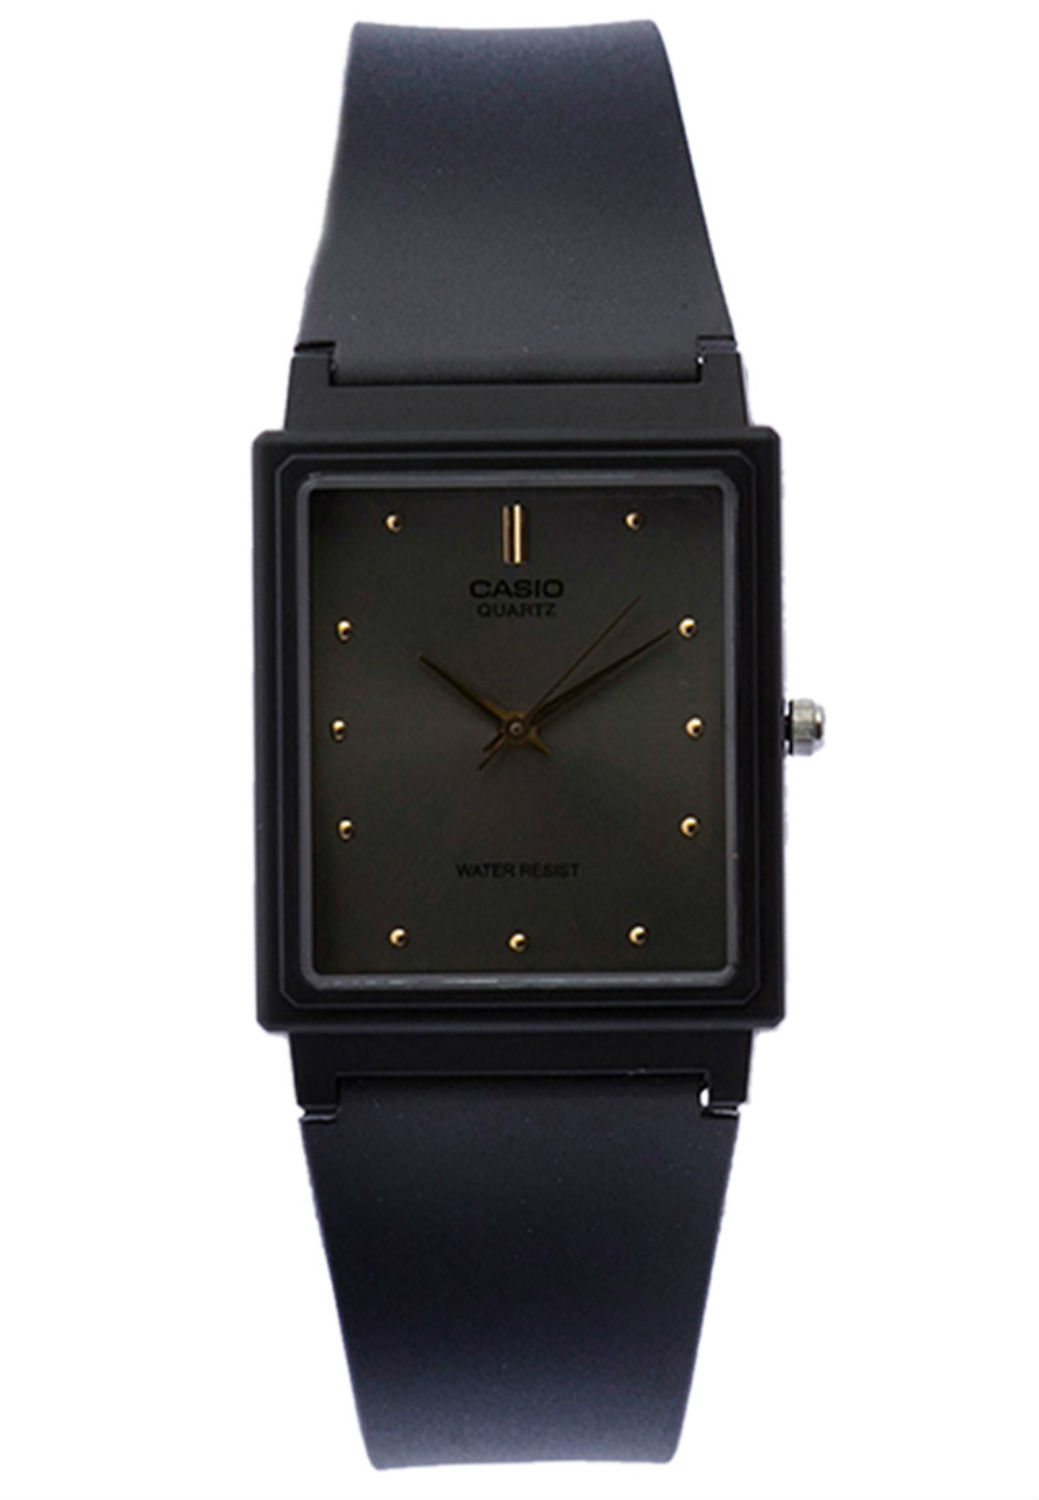 Men's Core MQ38-8A Black Resin Quartz Fashion Watch - image 1 of 3